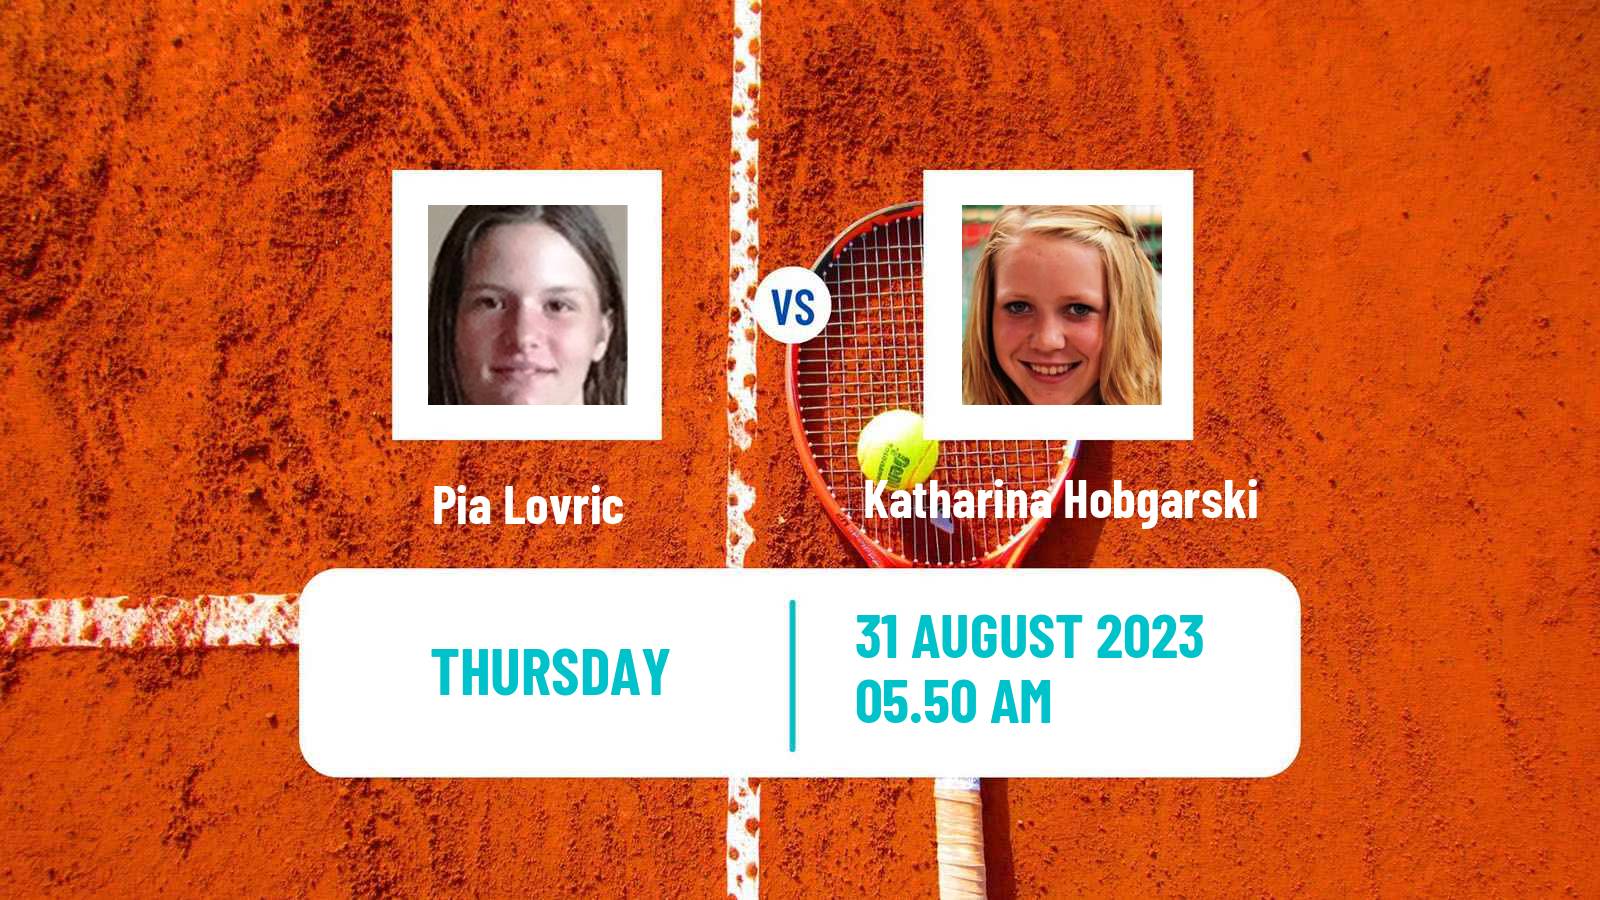 Tennis ITF W60 Prague 2 Women Pia Lovric - Katharina Hobgarski